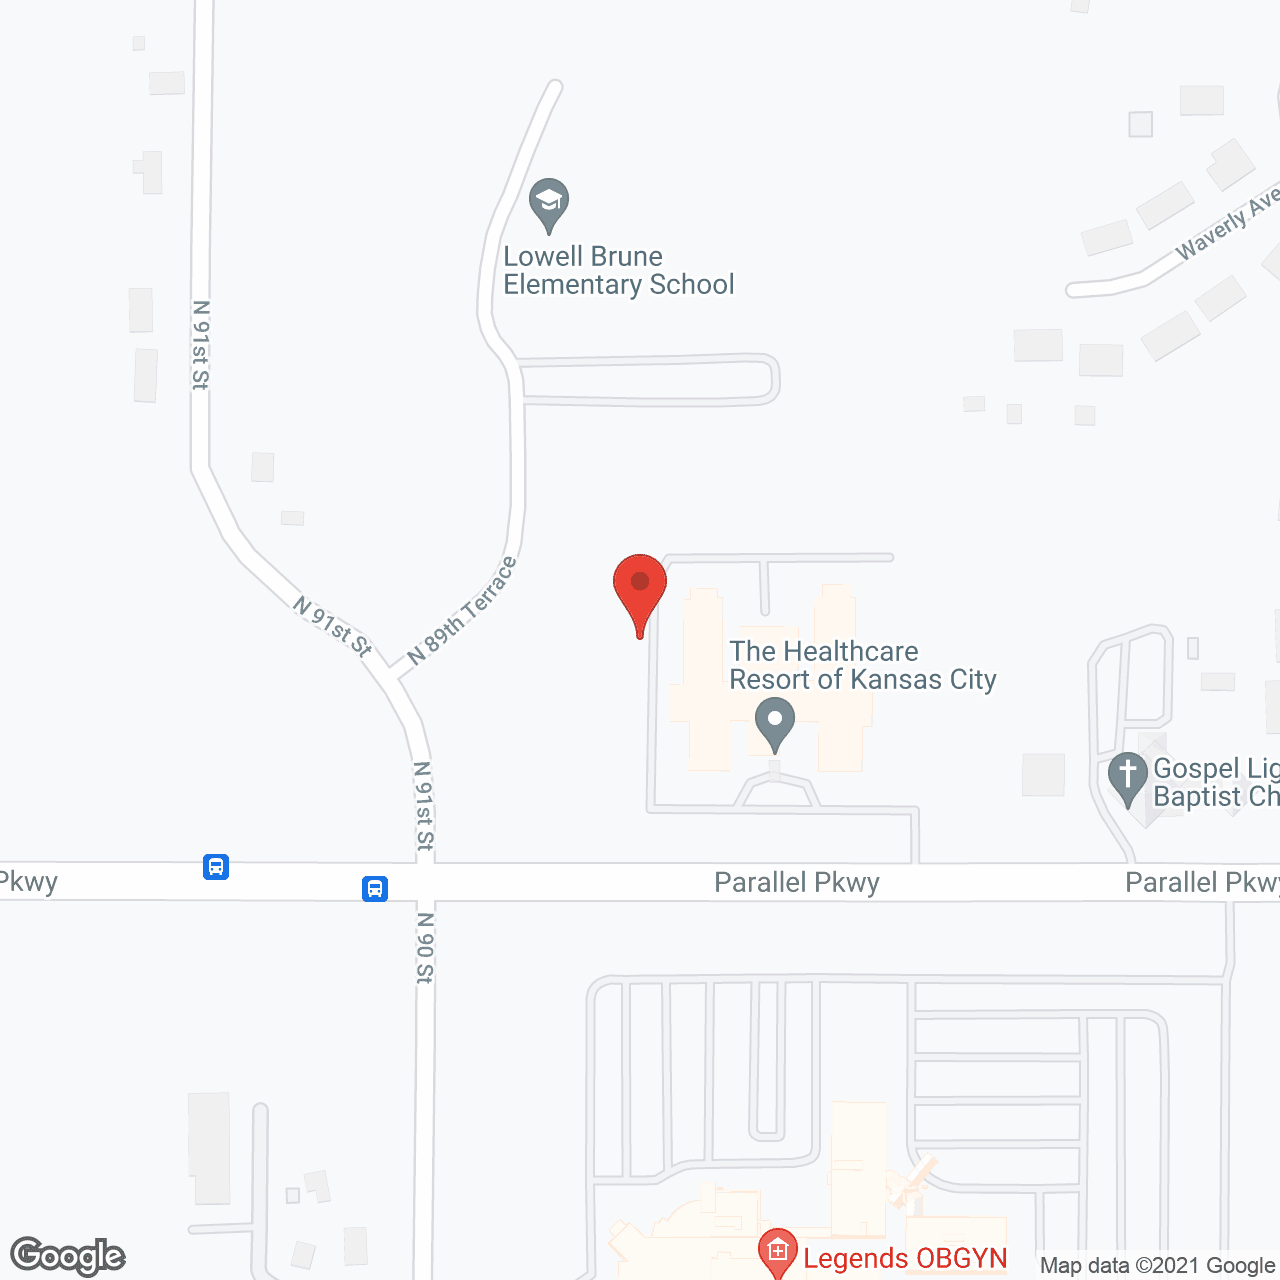 The Healthcare Resort of Kansas City in google map